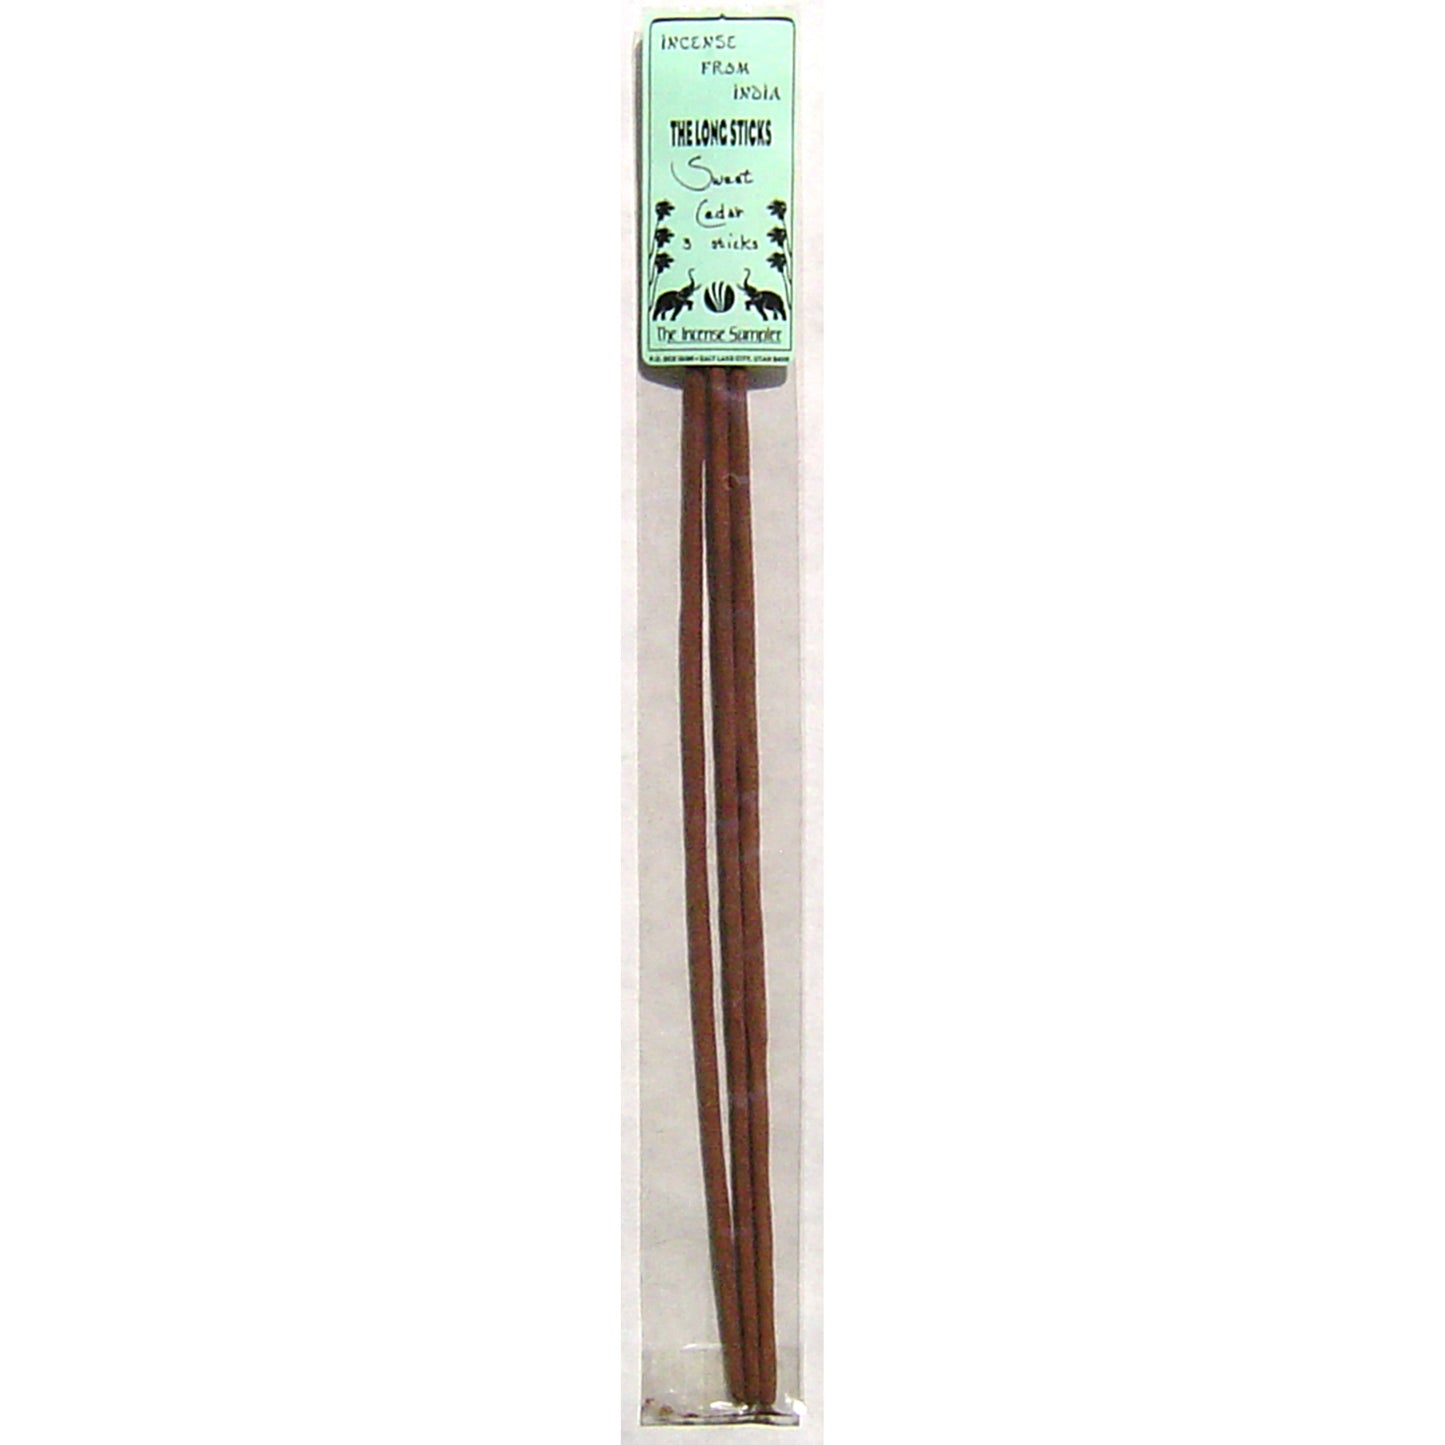 Incense From India - Sweet Cedar, 15" Garden Sticks